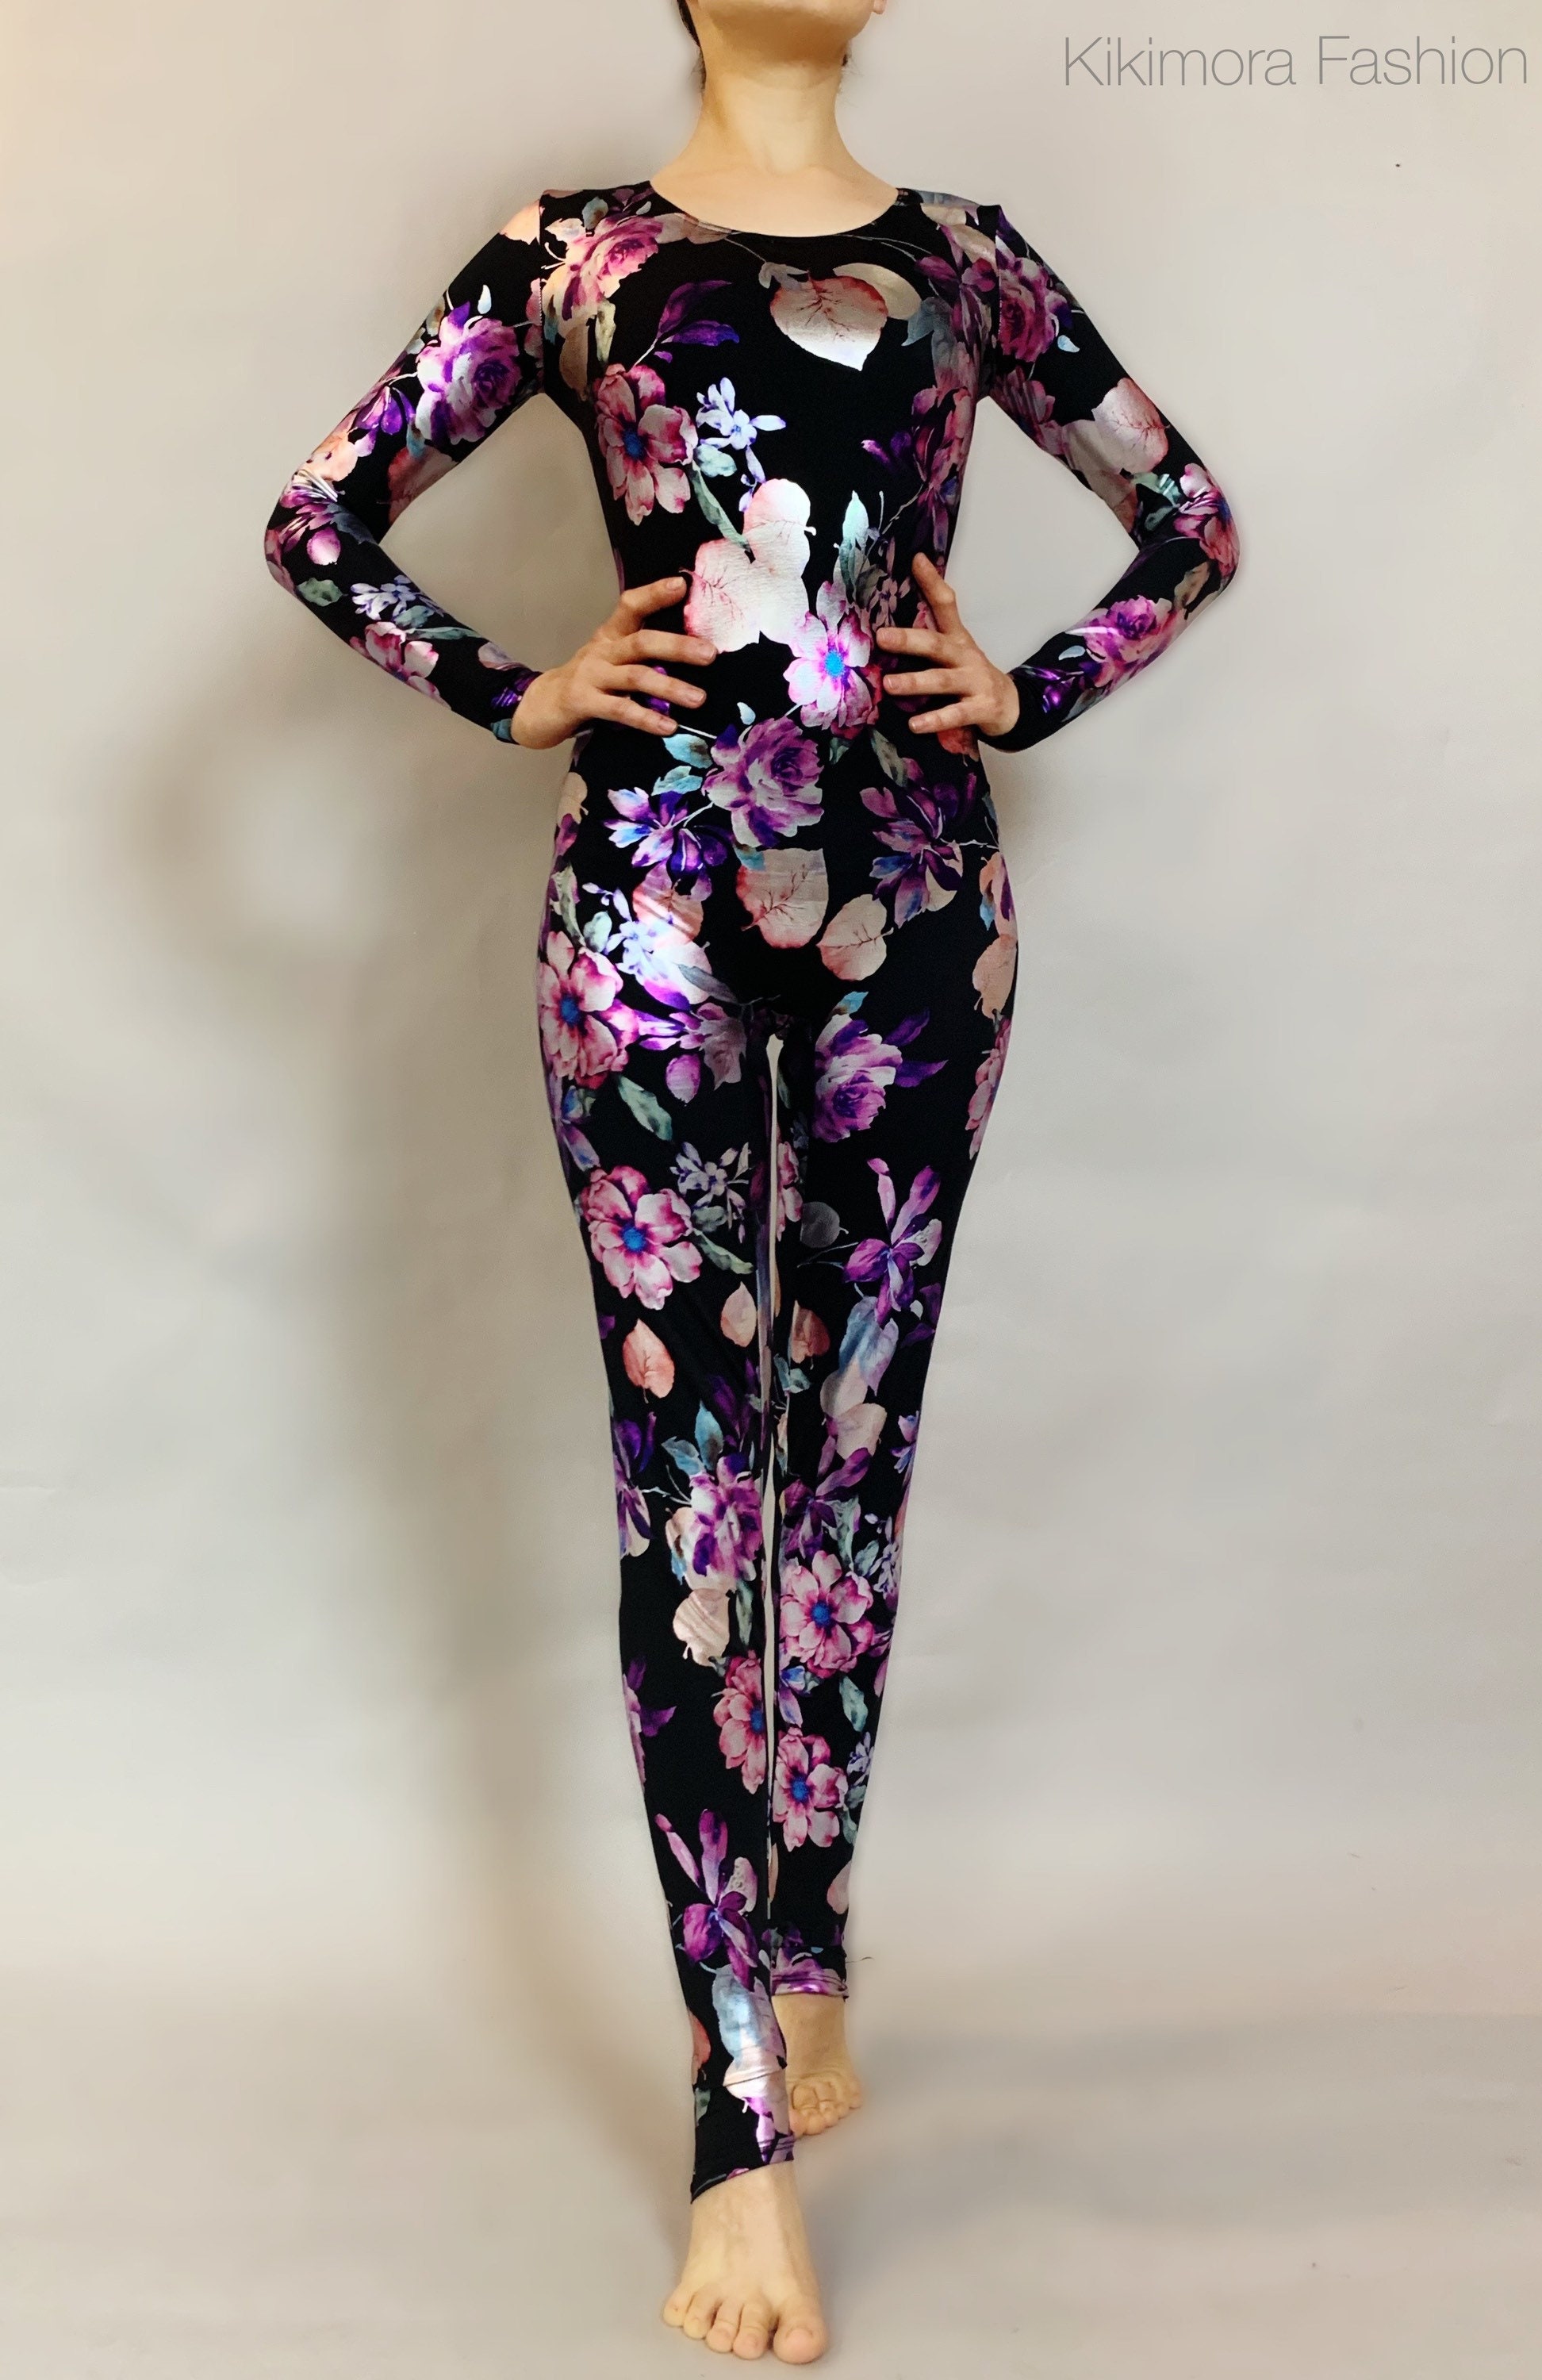 Zentai Fashionbeautiful Bodysuit for Woman or Man Spandex | Etsy